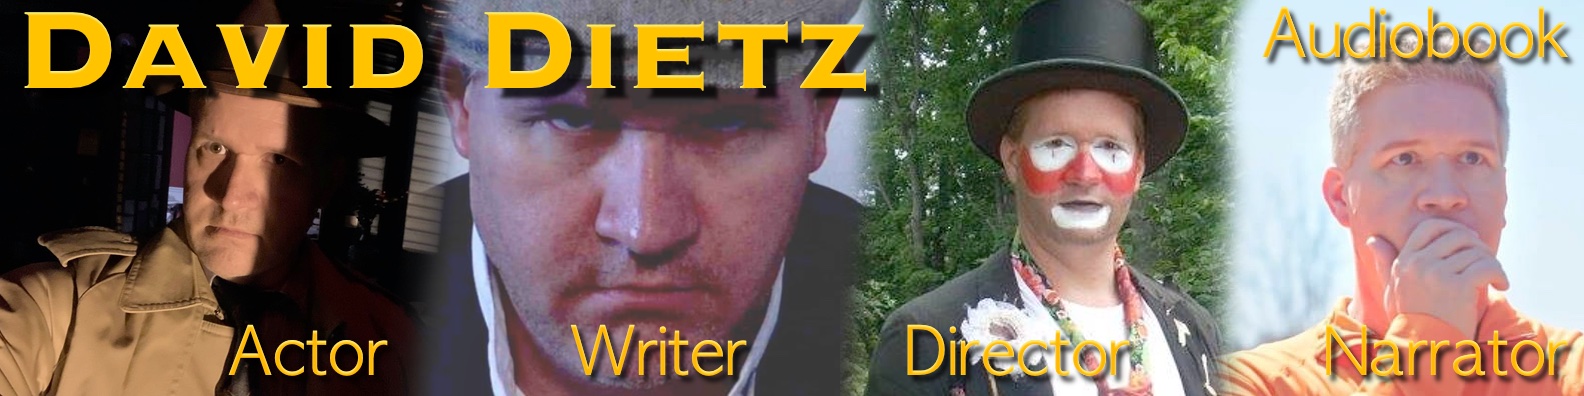 DietzTheThird.com - Home of David Dietz, Actor, Writer, Director, Producer